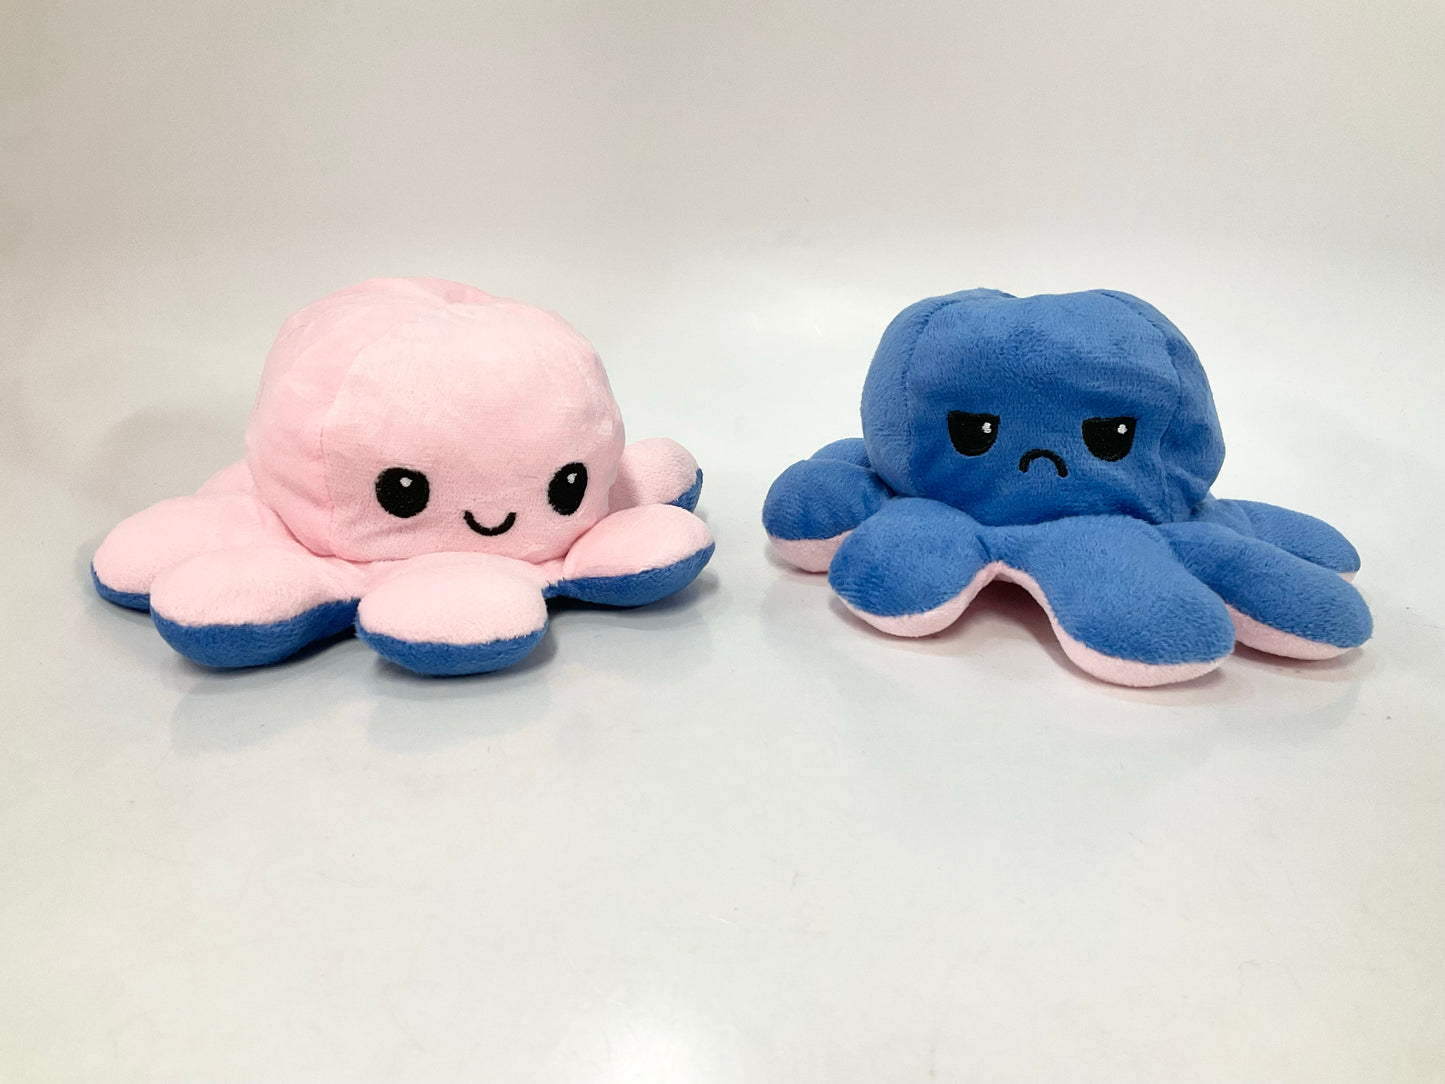 Reversible Plush Moody Octopus Toy #89-030435